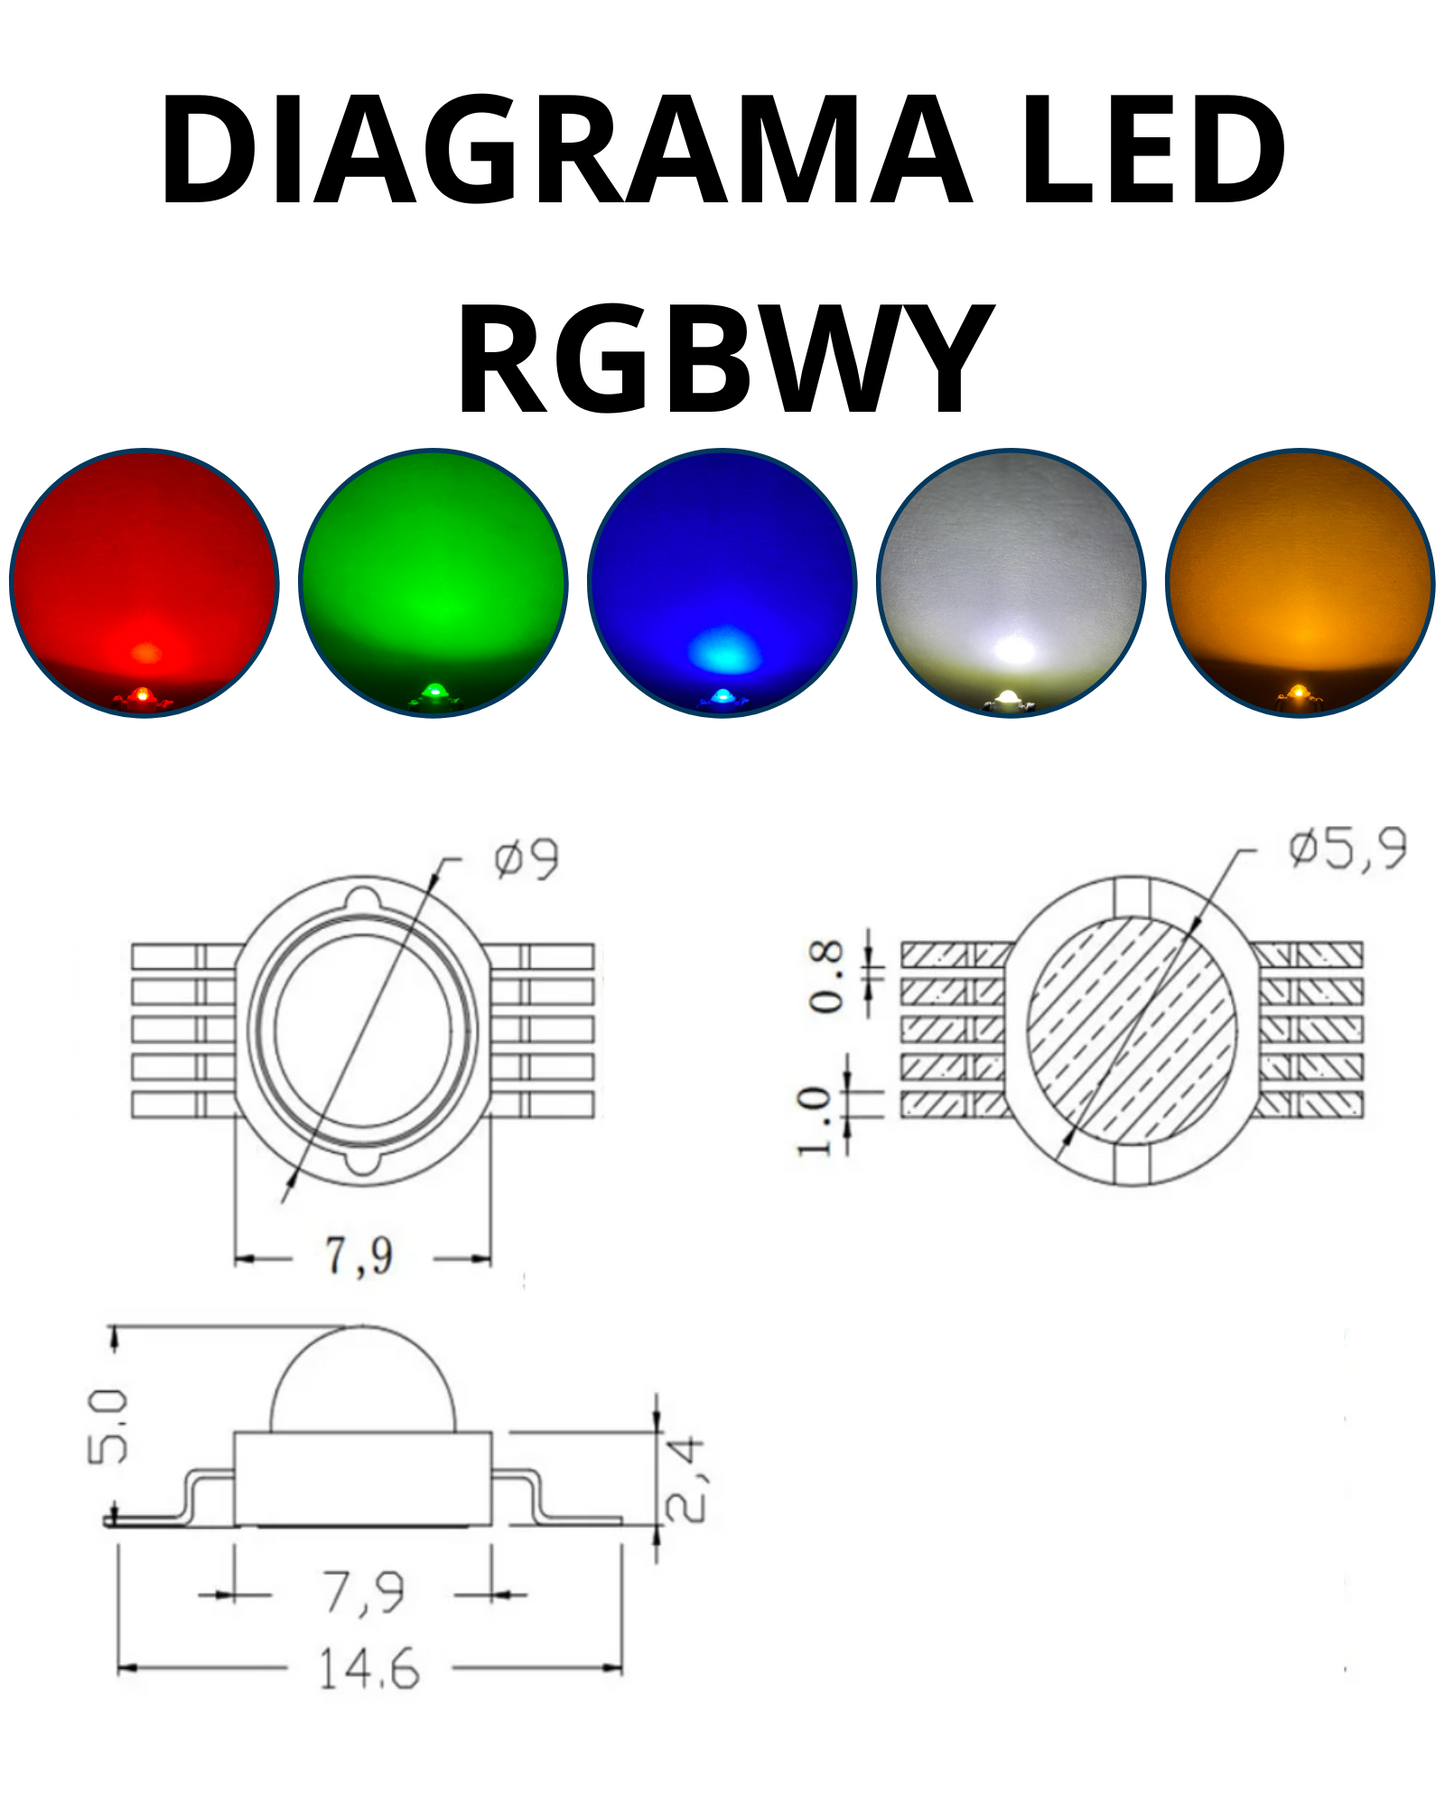 Chip LED de potencia 12W RGBWY 10 pines | Pastilla LED RGB+ Blanco + Amarillo